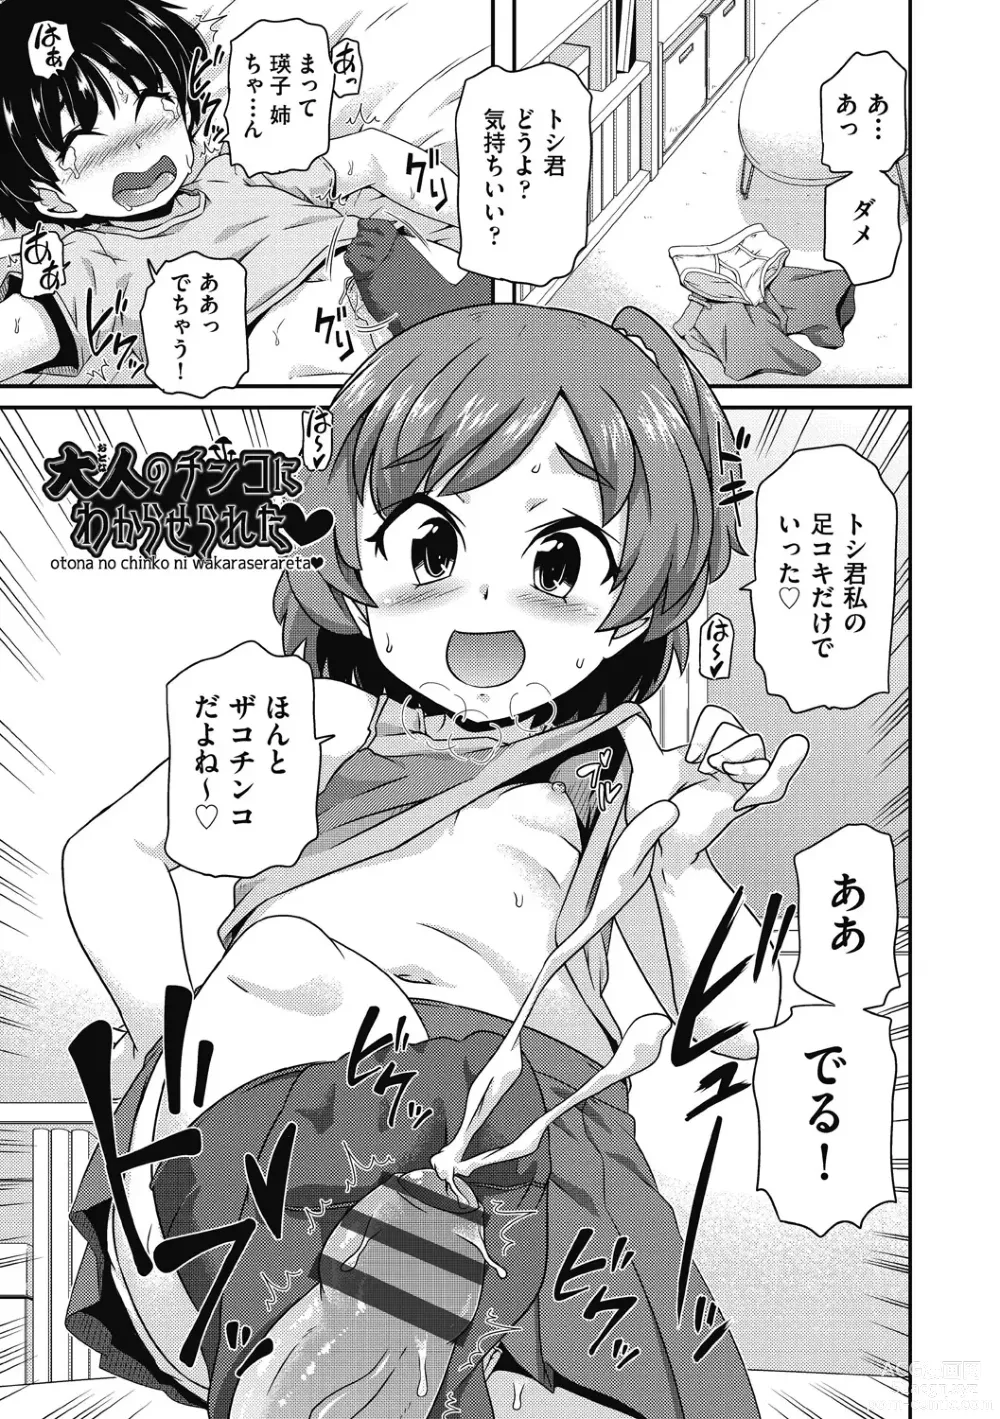 Page 5 of manga Chiisame Vacance